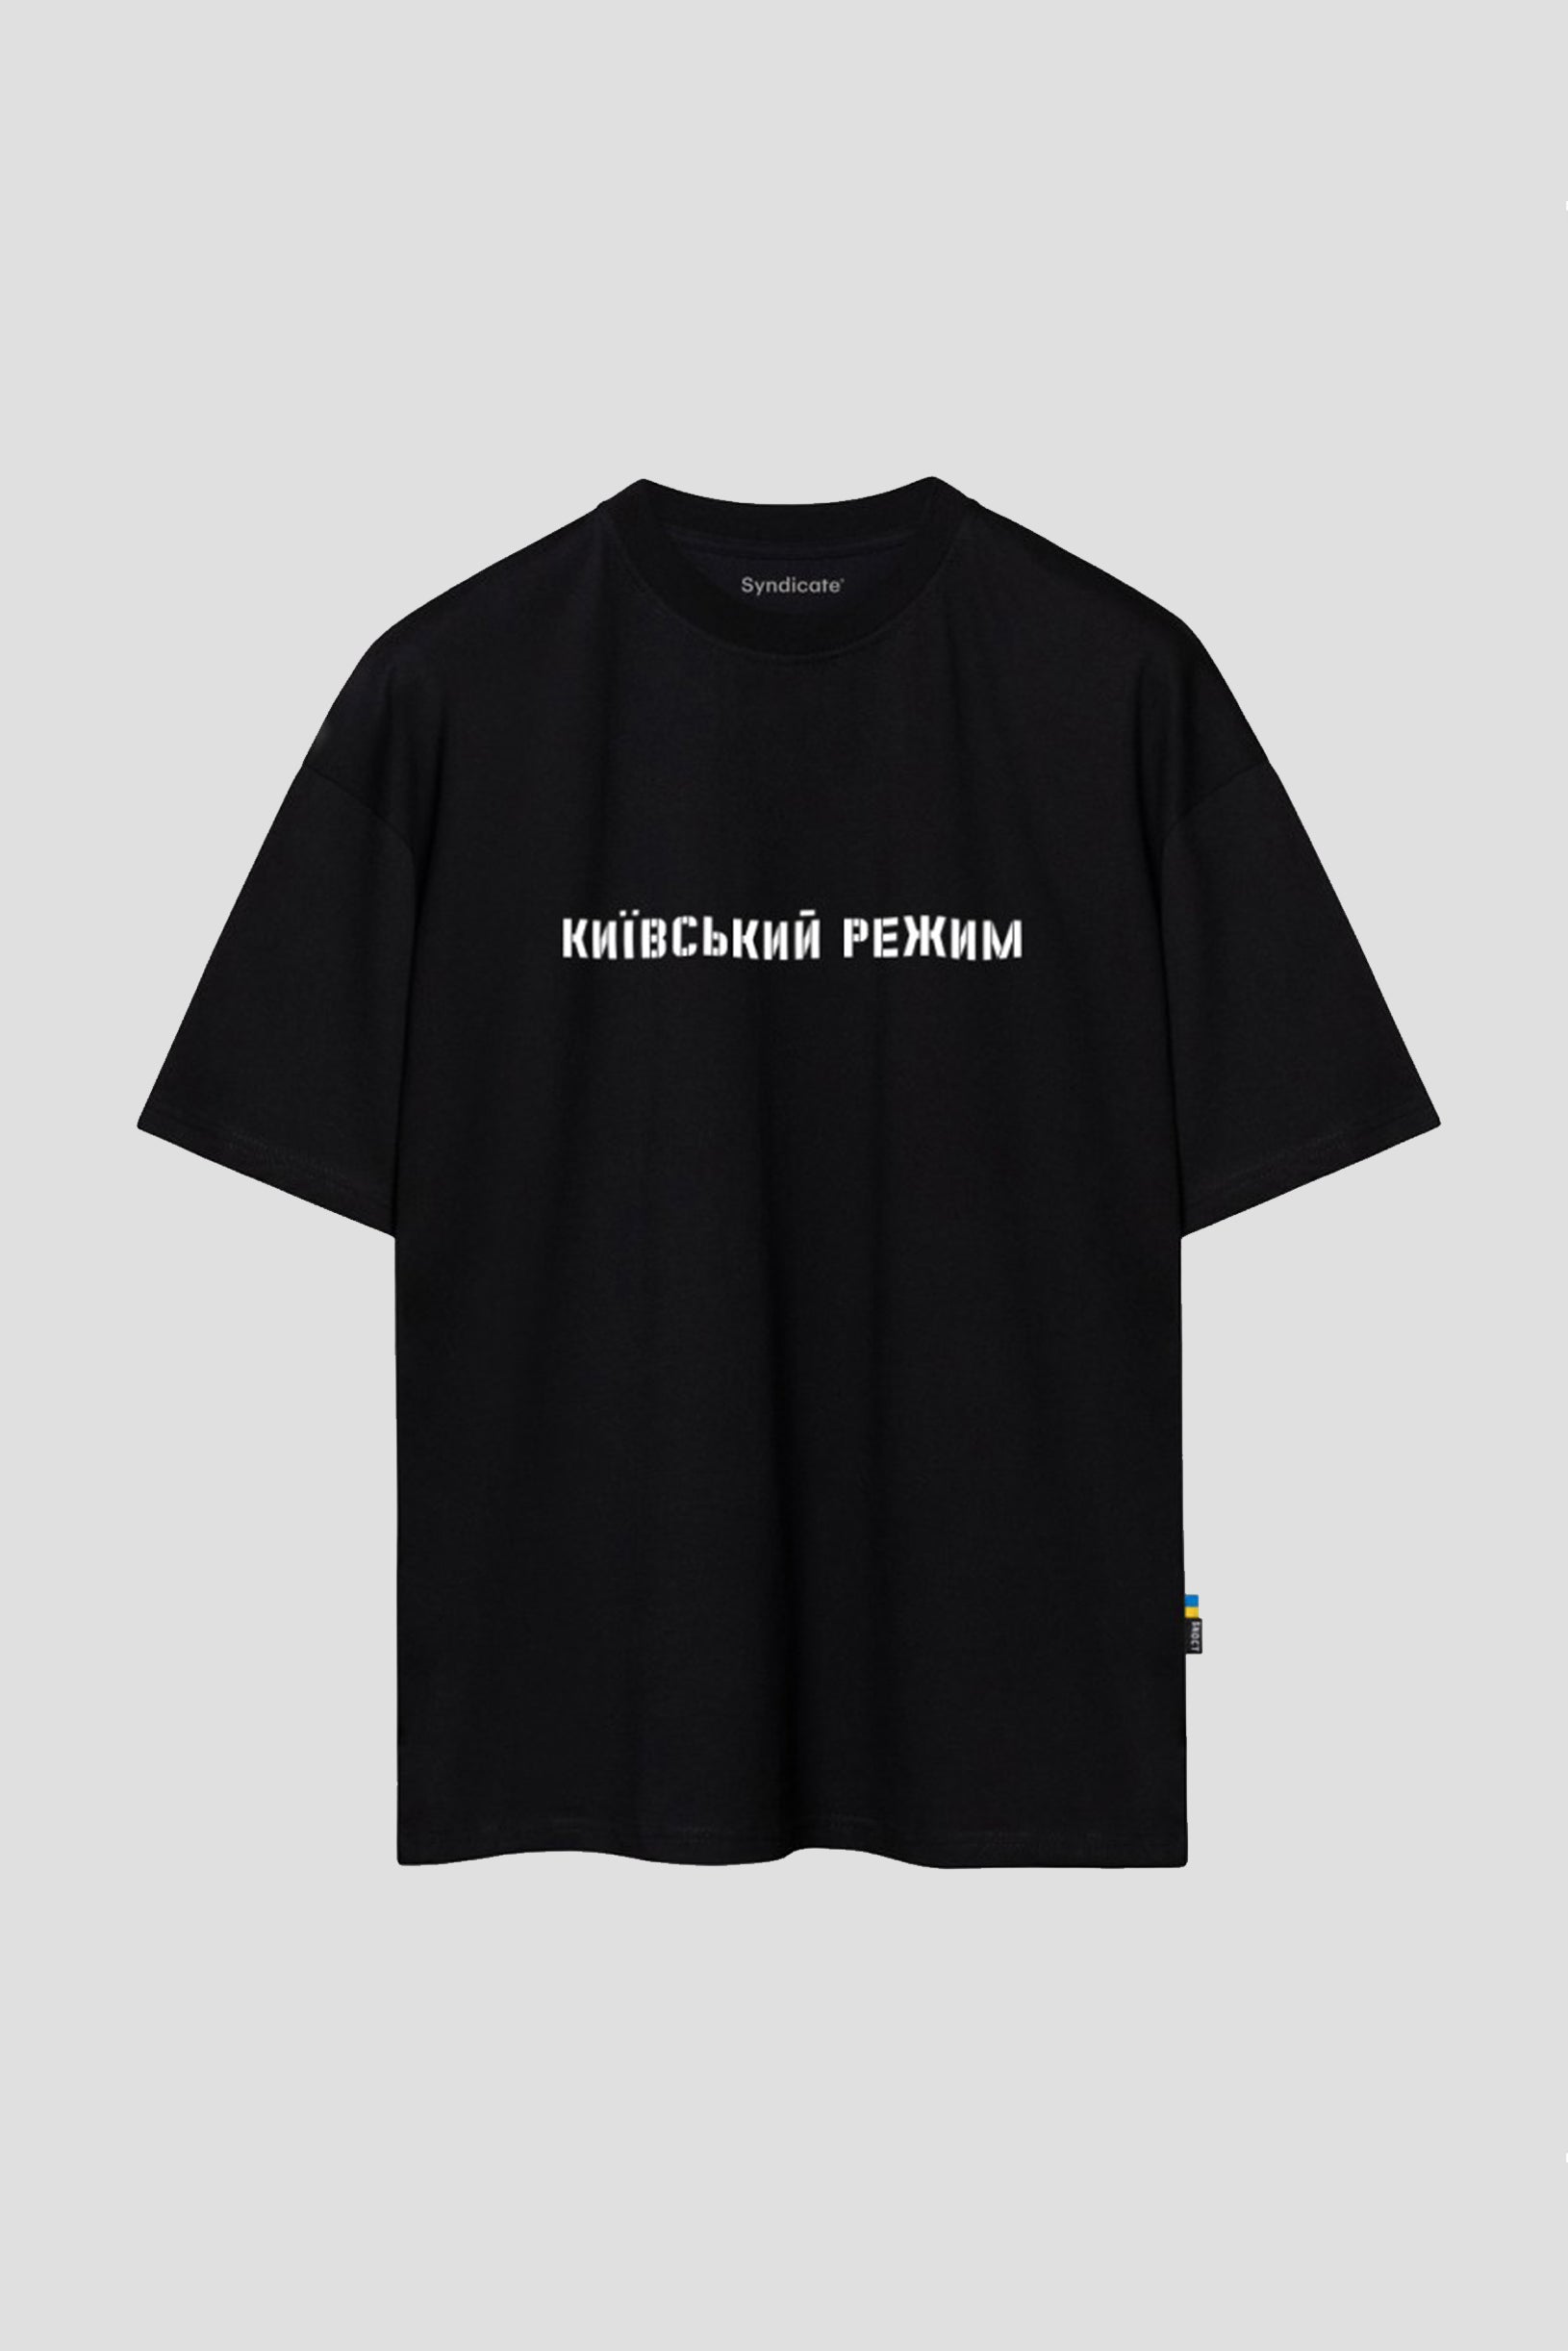 SNDCT x Vova Vorotniov "Kyiv Regime" Oversize T-shirt Black